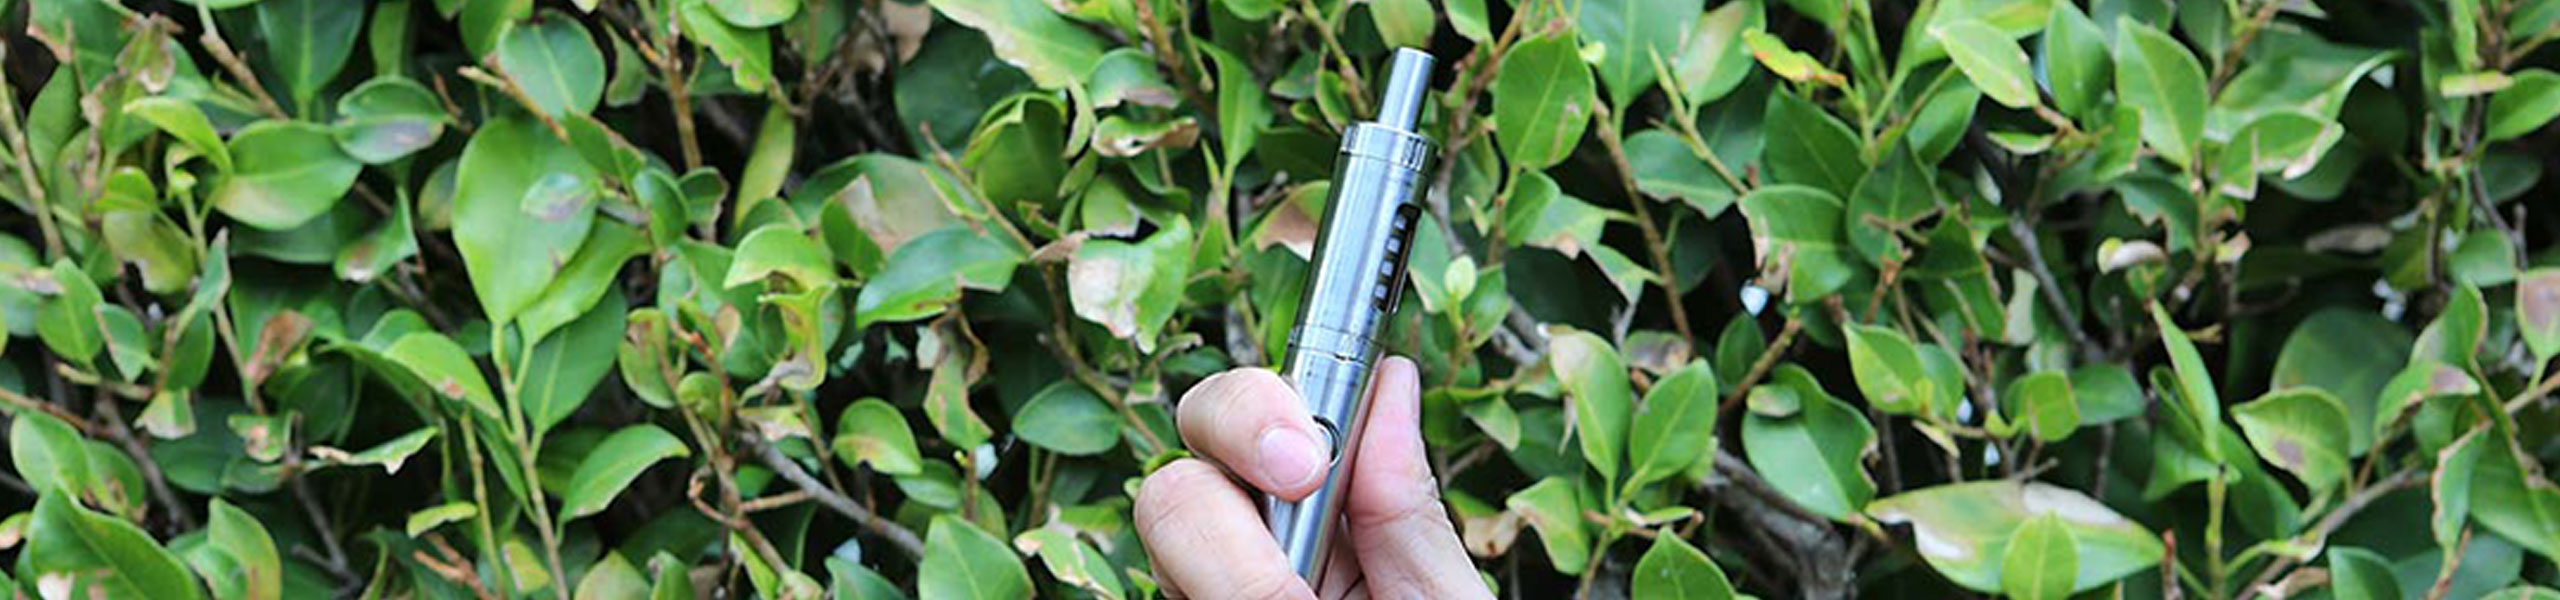 Hand holding an e-cigarette